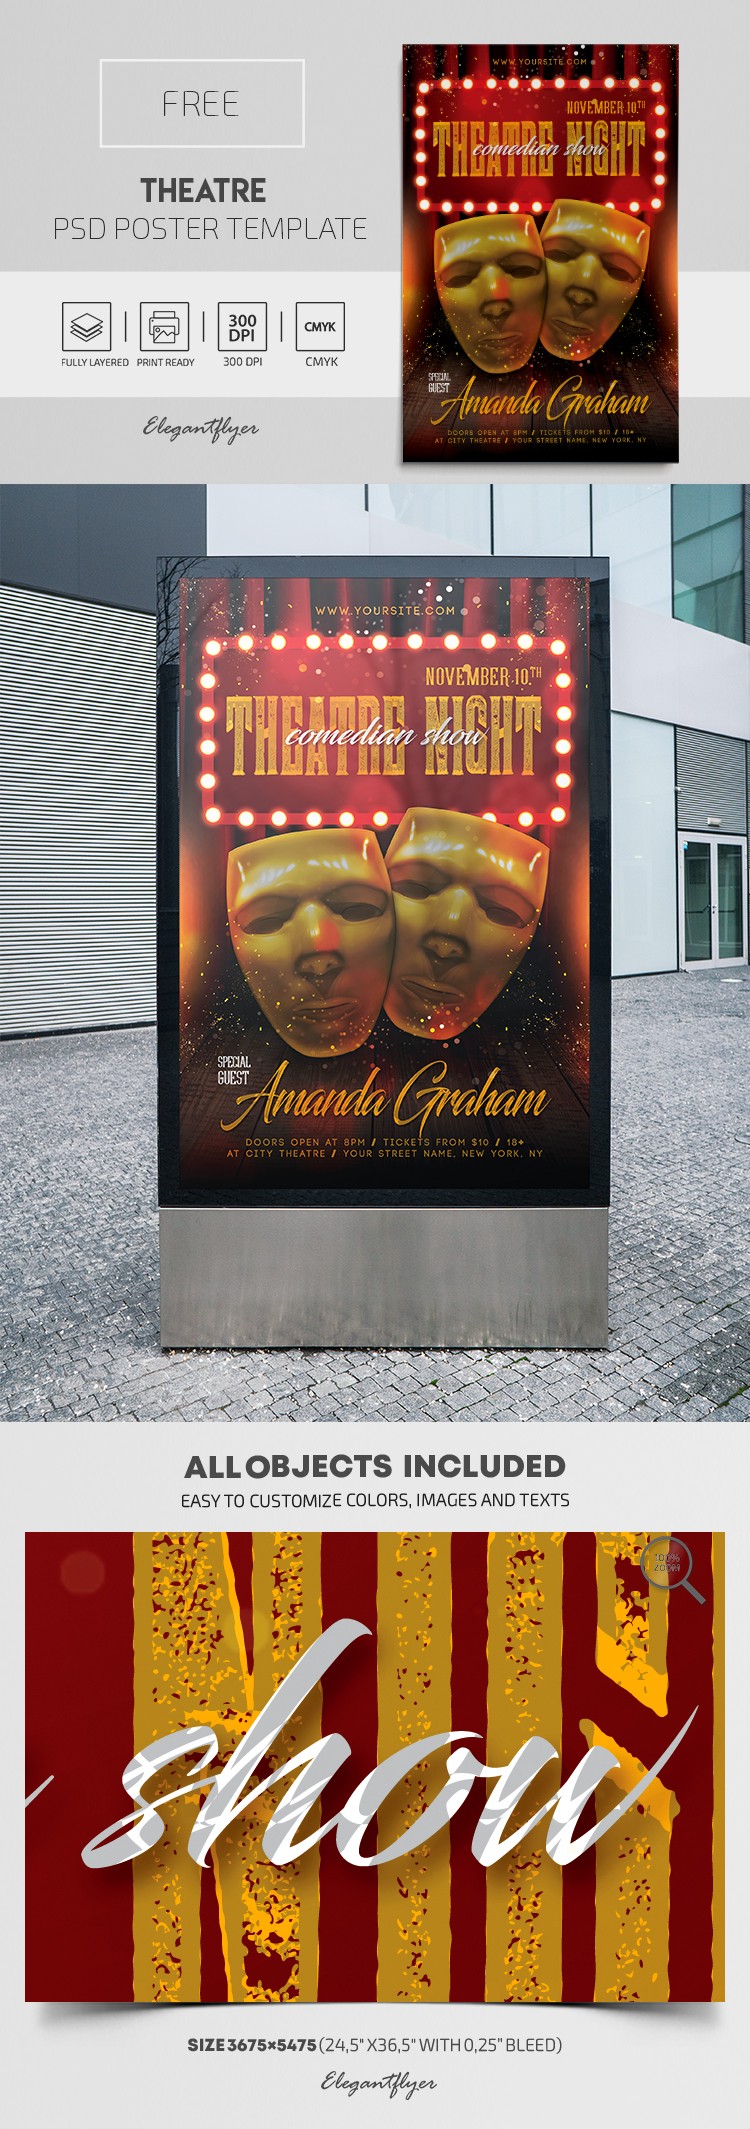 Theatre Poster by ElegantFlyer